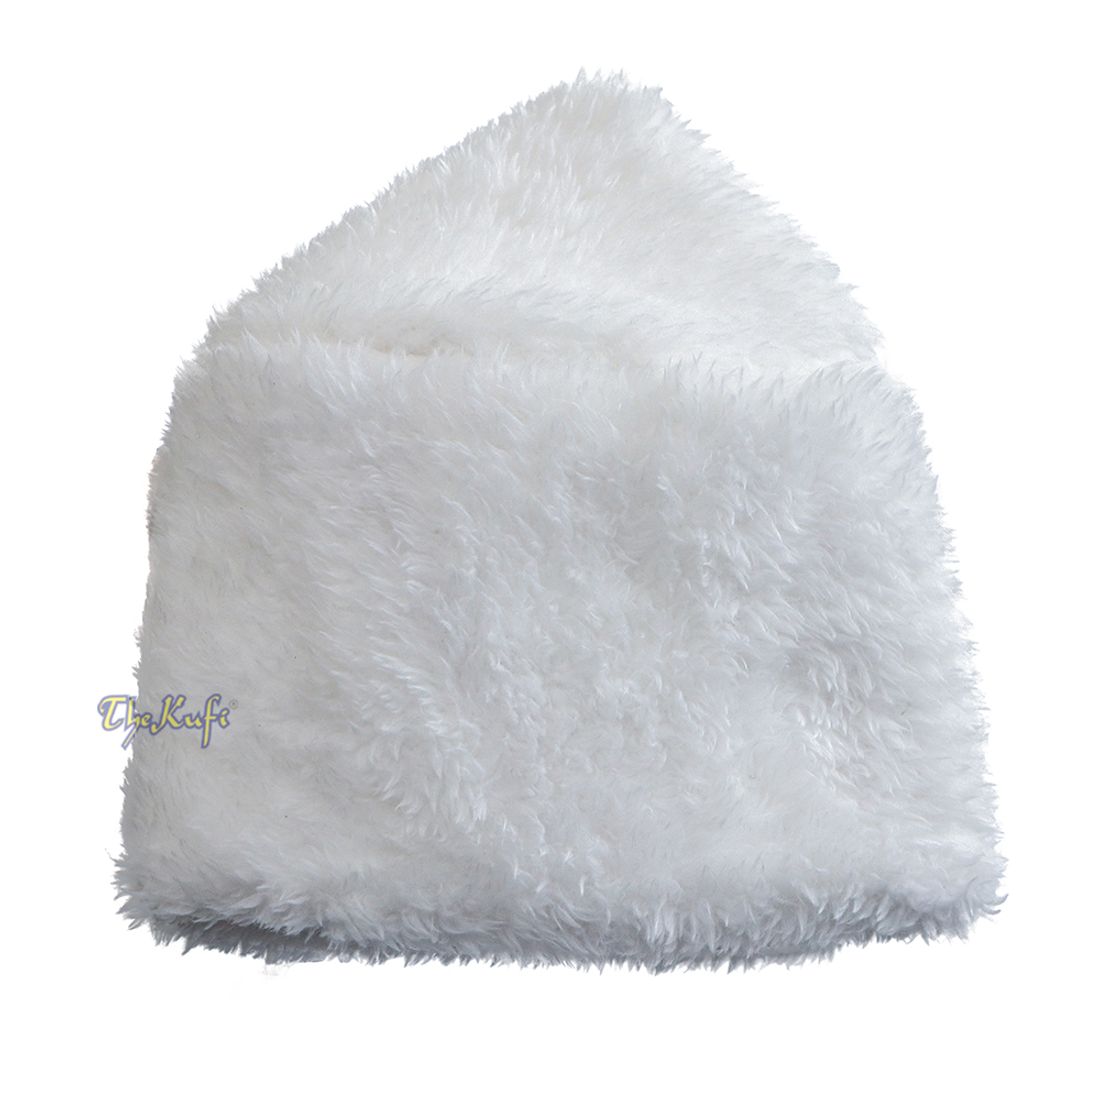 White Winter Kufi Faux Fur Warm Chechen Uzbeki Style Islamic Hat Plush One-size Medium-large Stretchy 4-inch Tall Head Cover Muslim